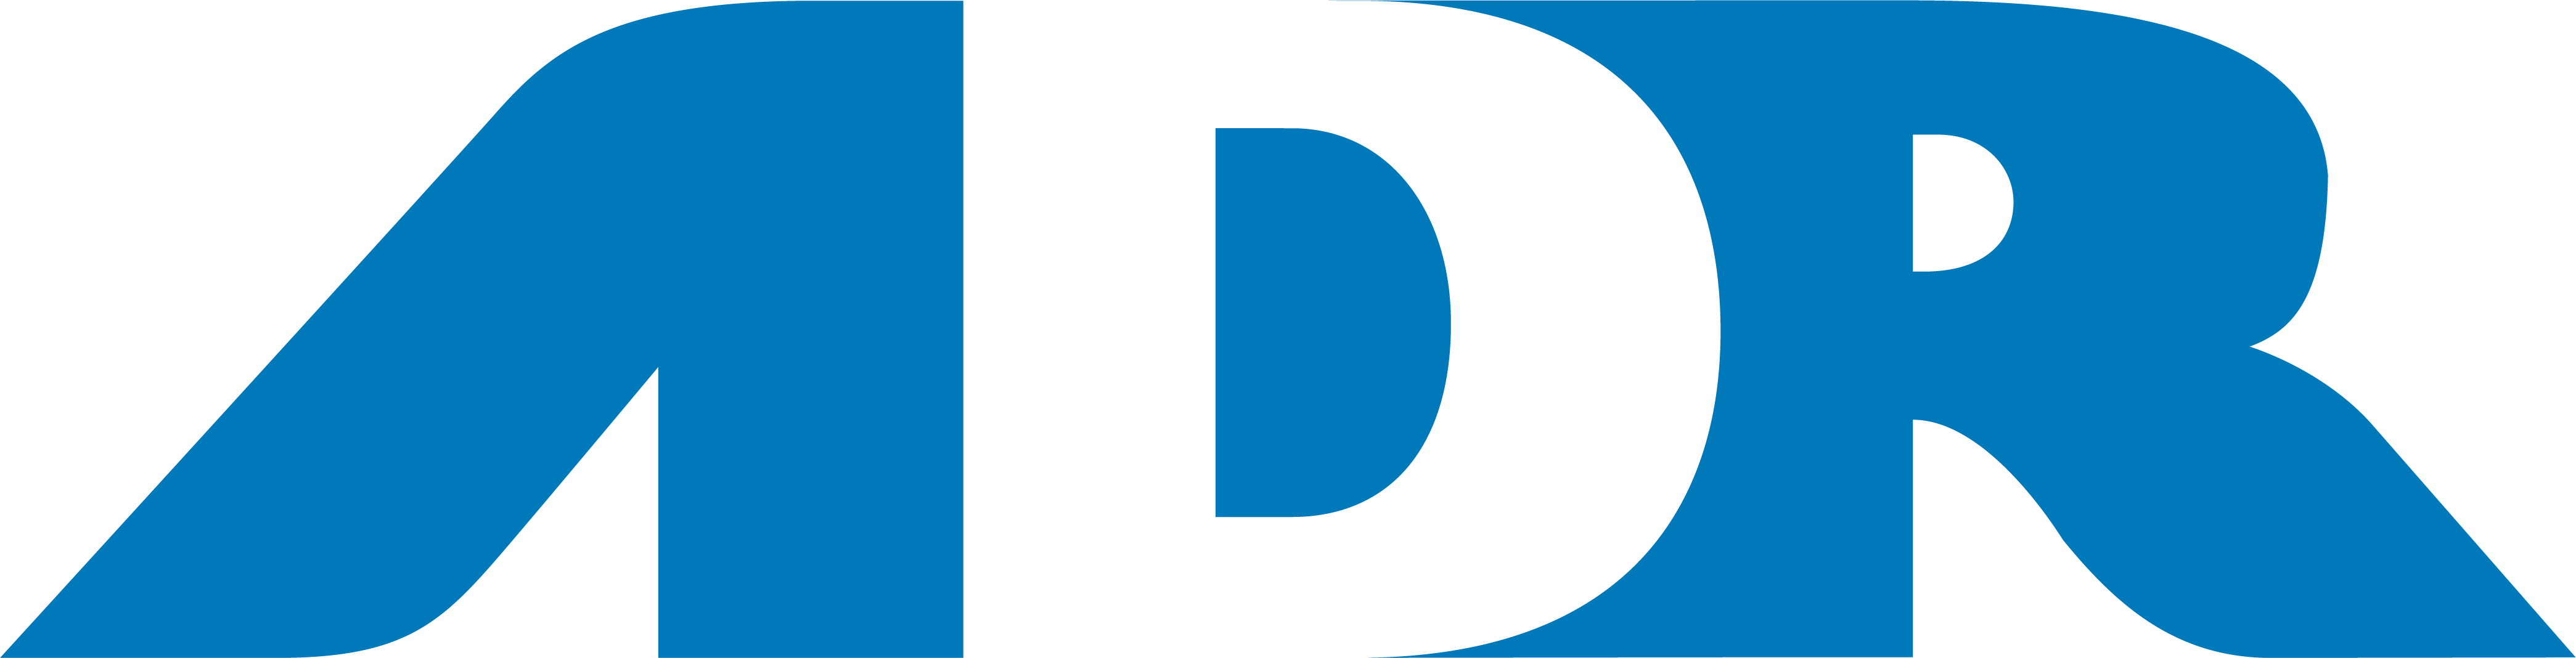 ADR-only-logo